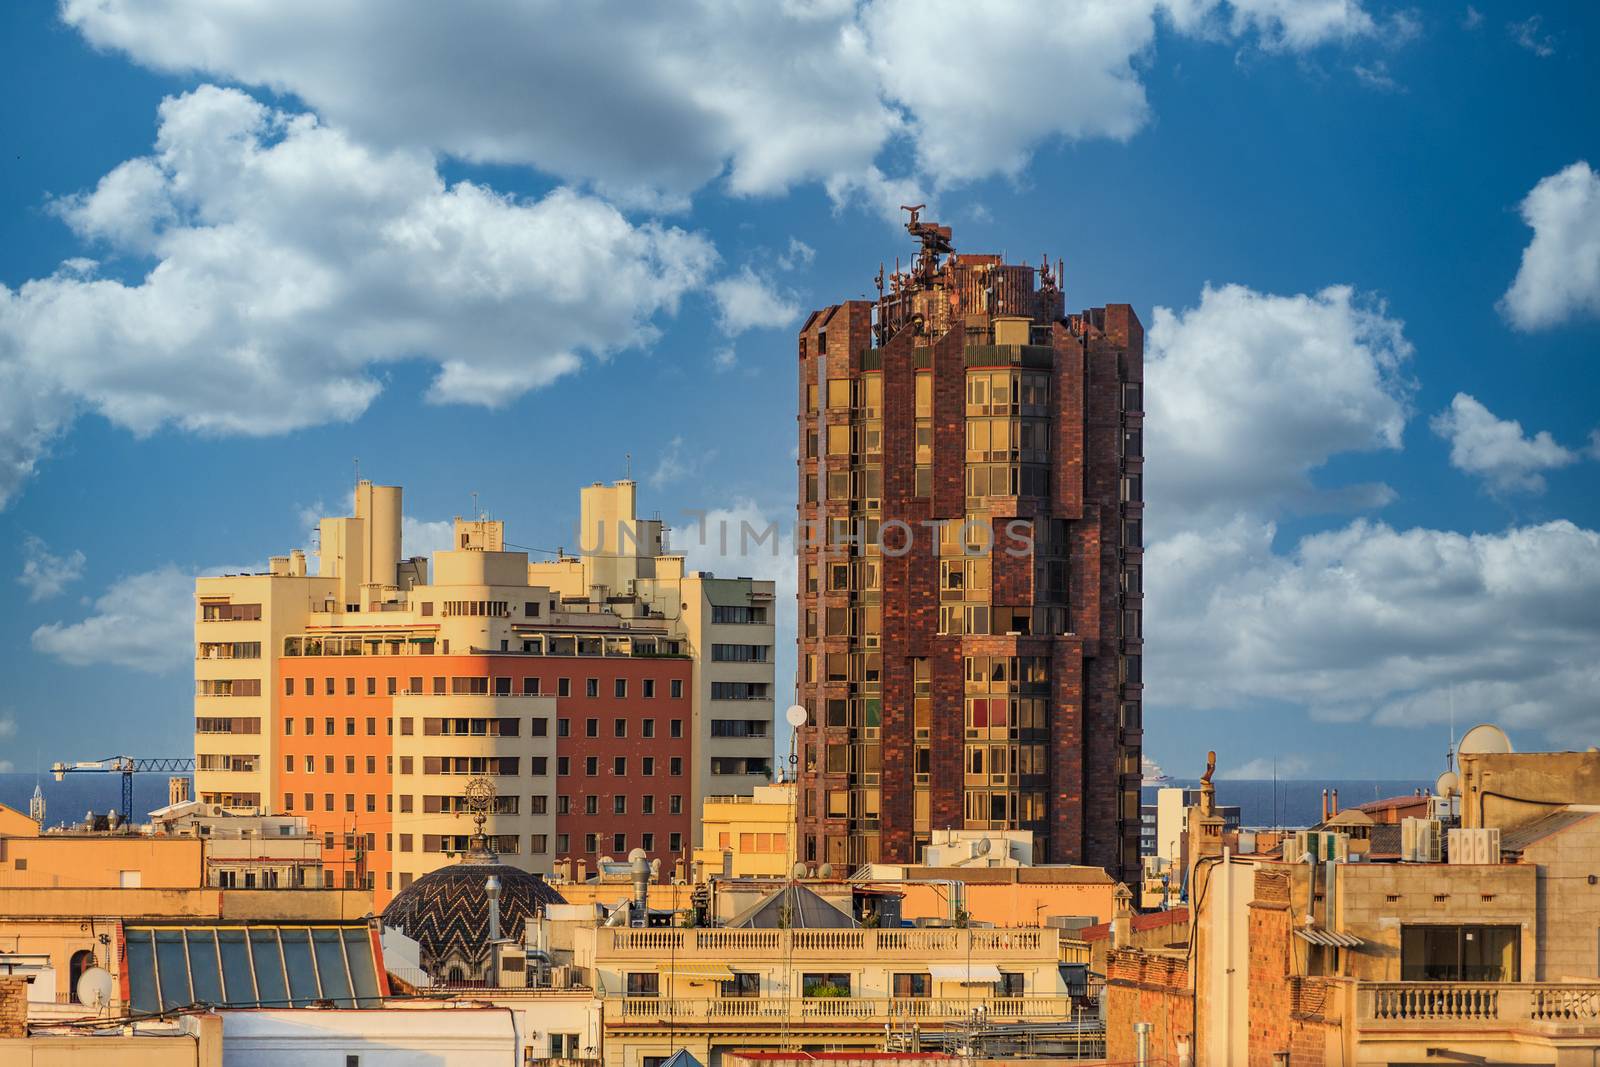 Modern Barcelona Buildings under Nice Skies by dbvirago